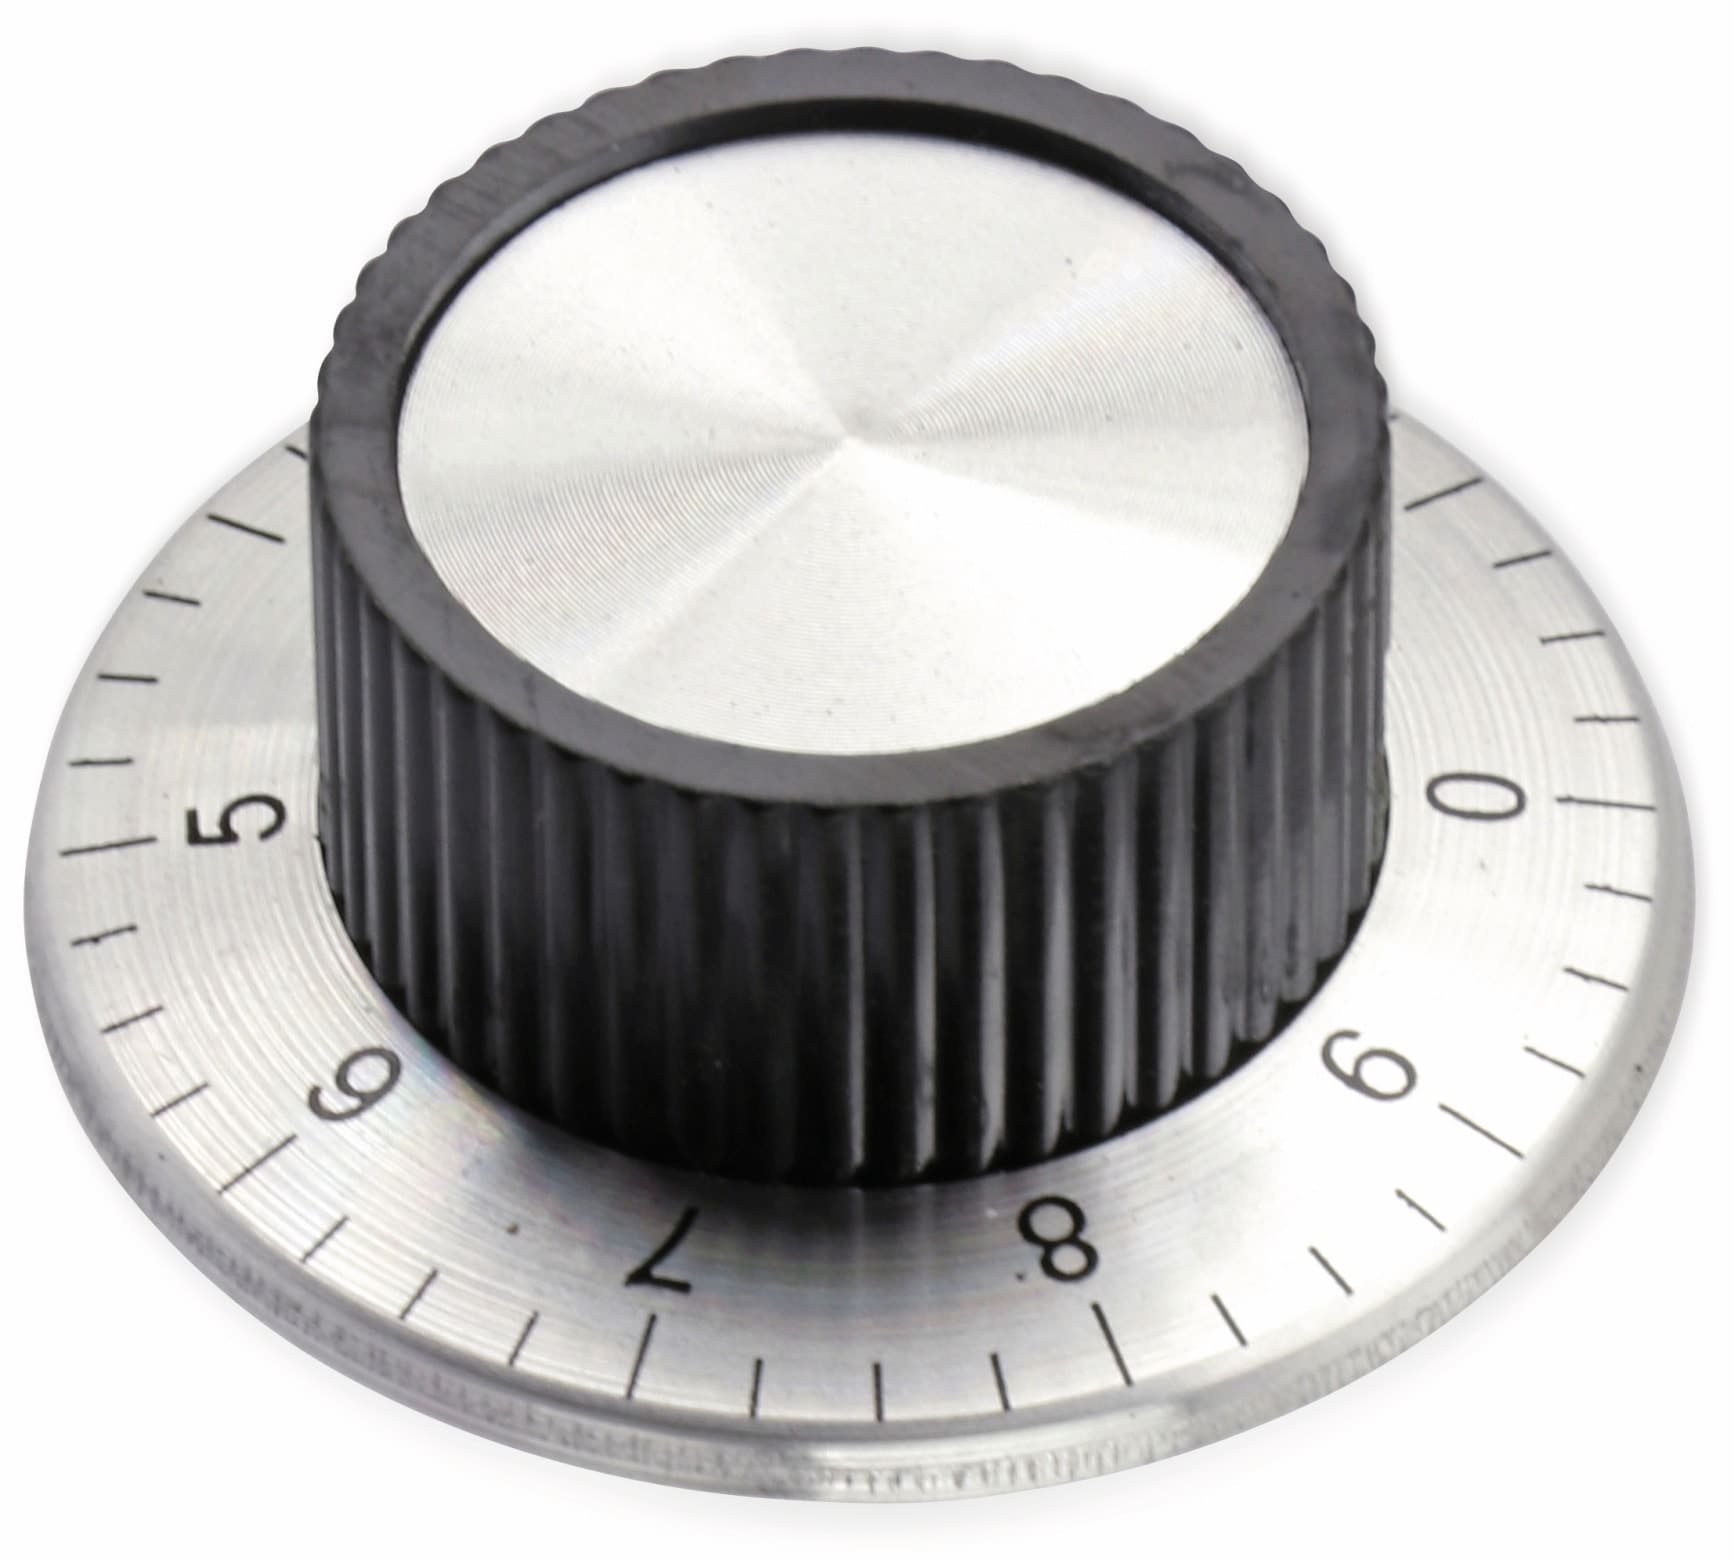 Aluminium-Drehknopf mit Skala 0...9, 38x15 mm, silber/schwarz